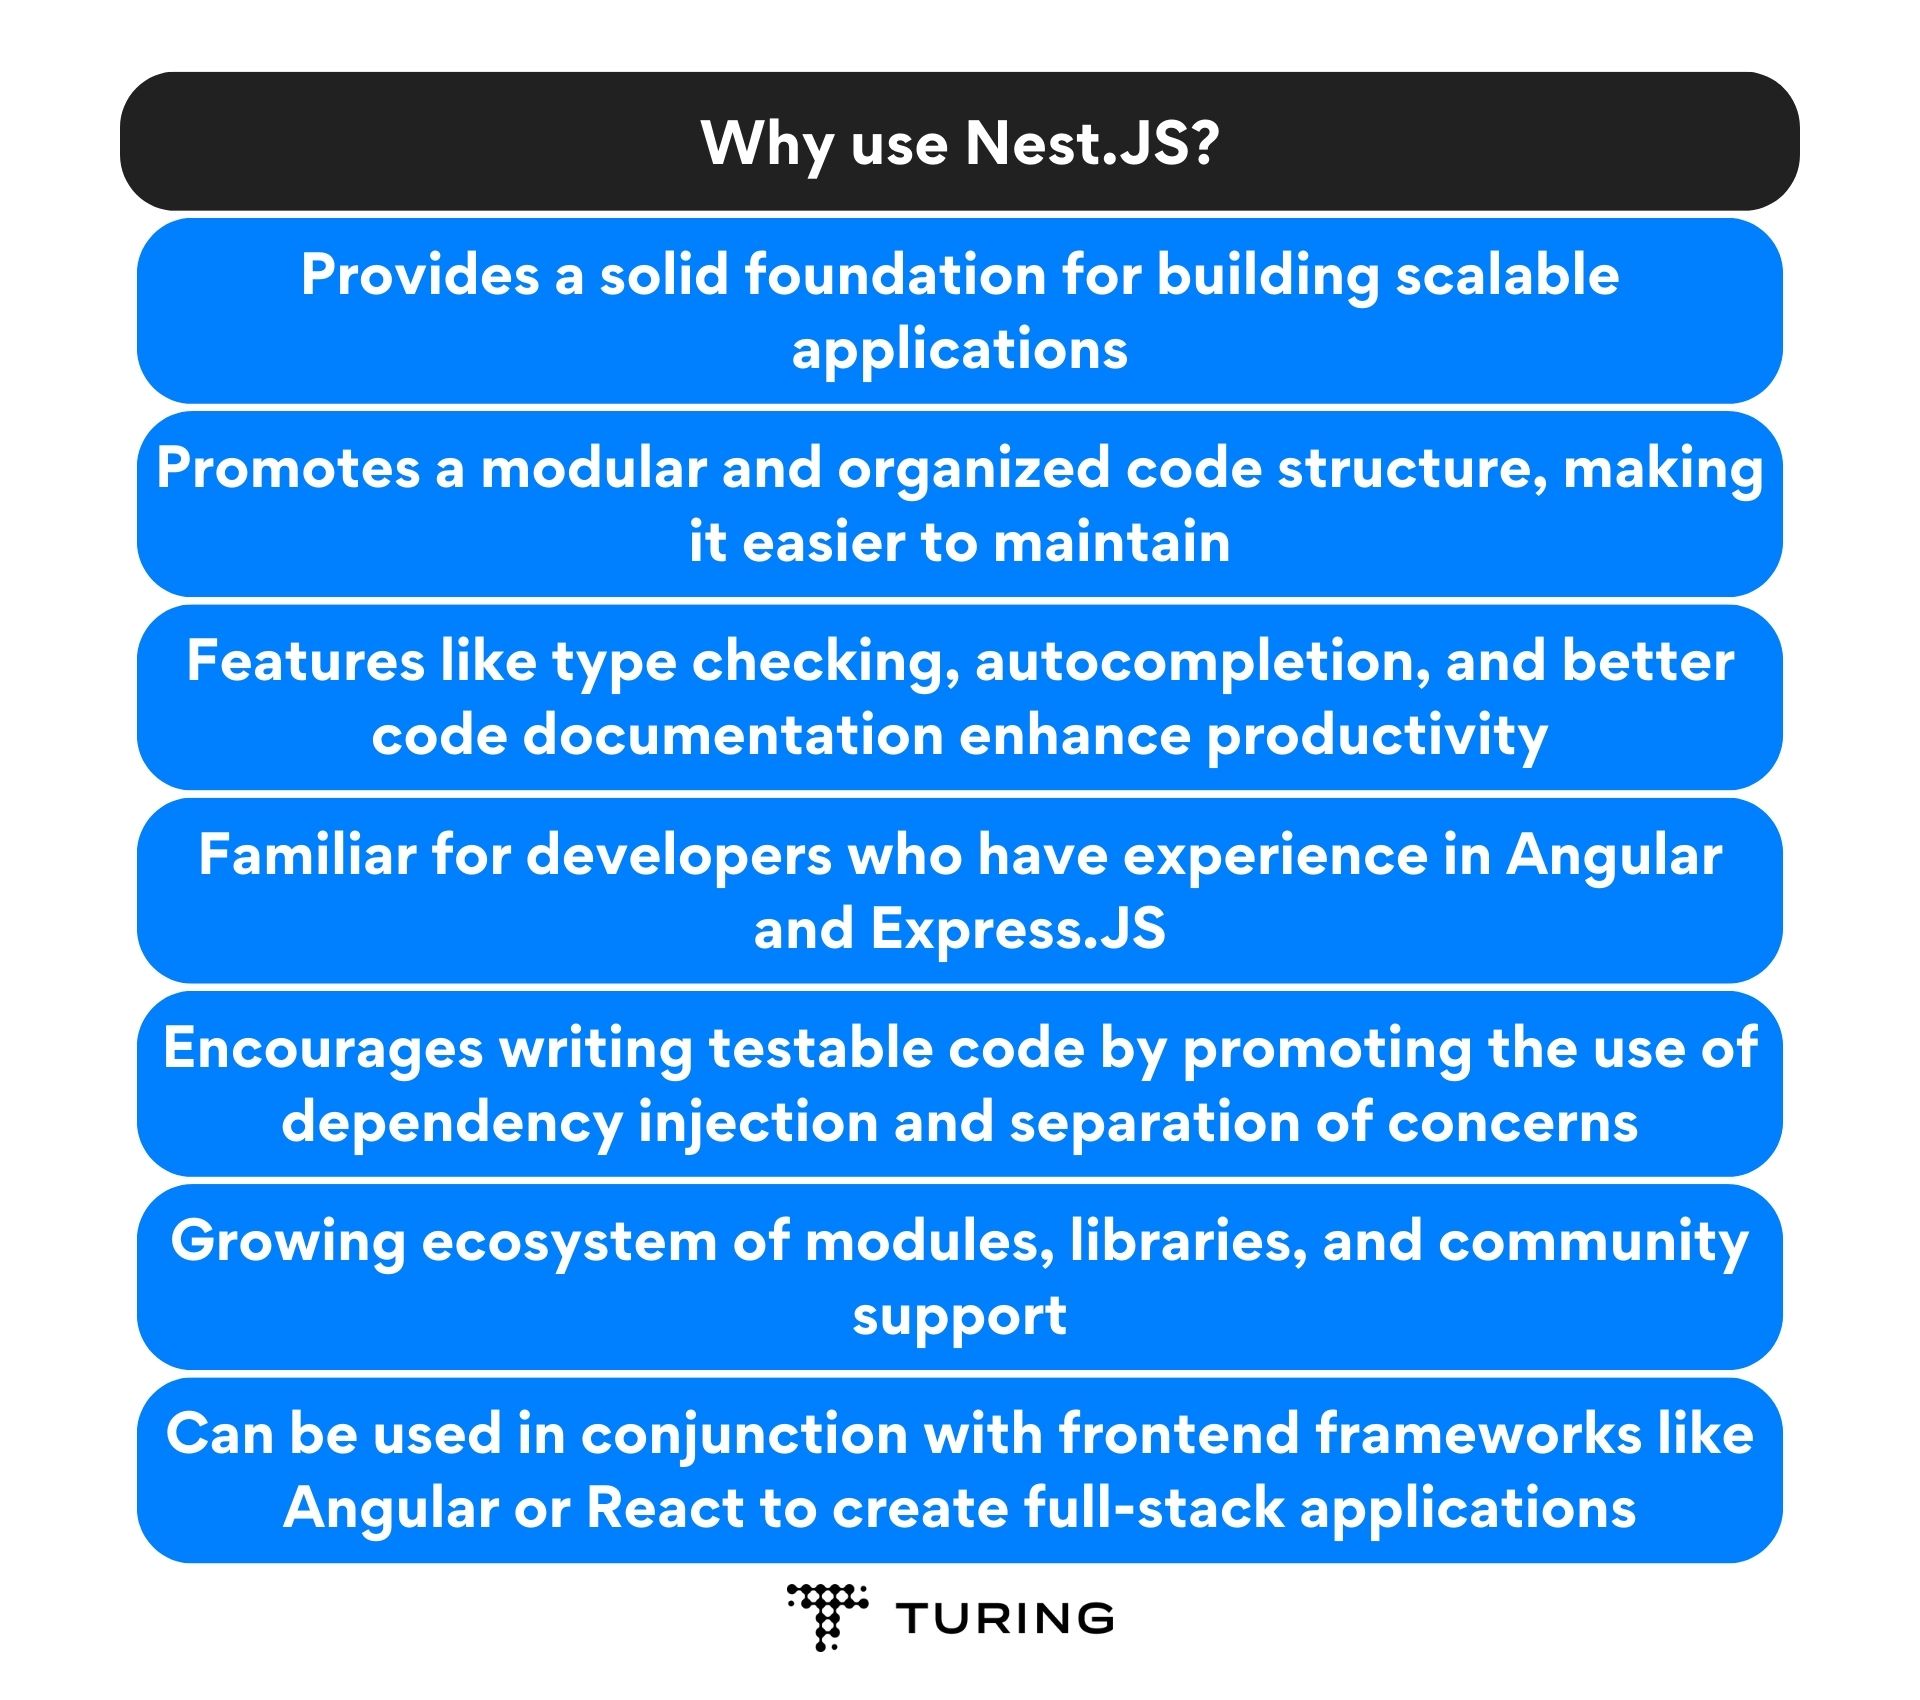 Why use Nest.JS